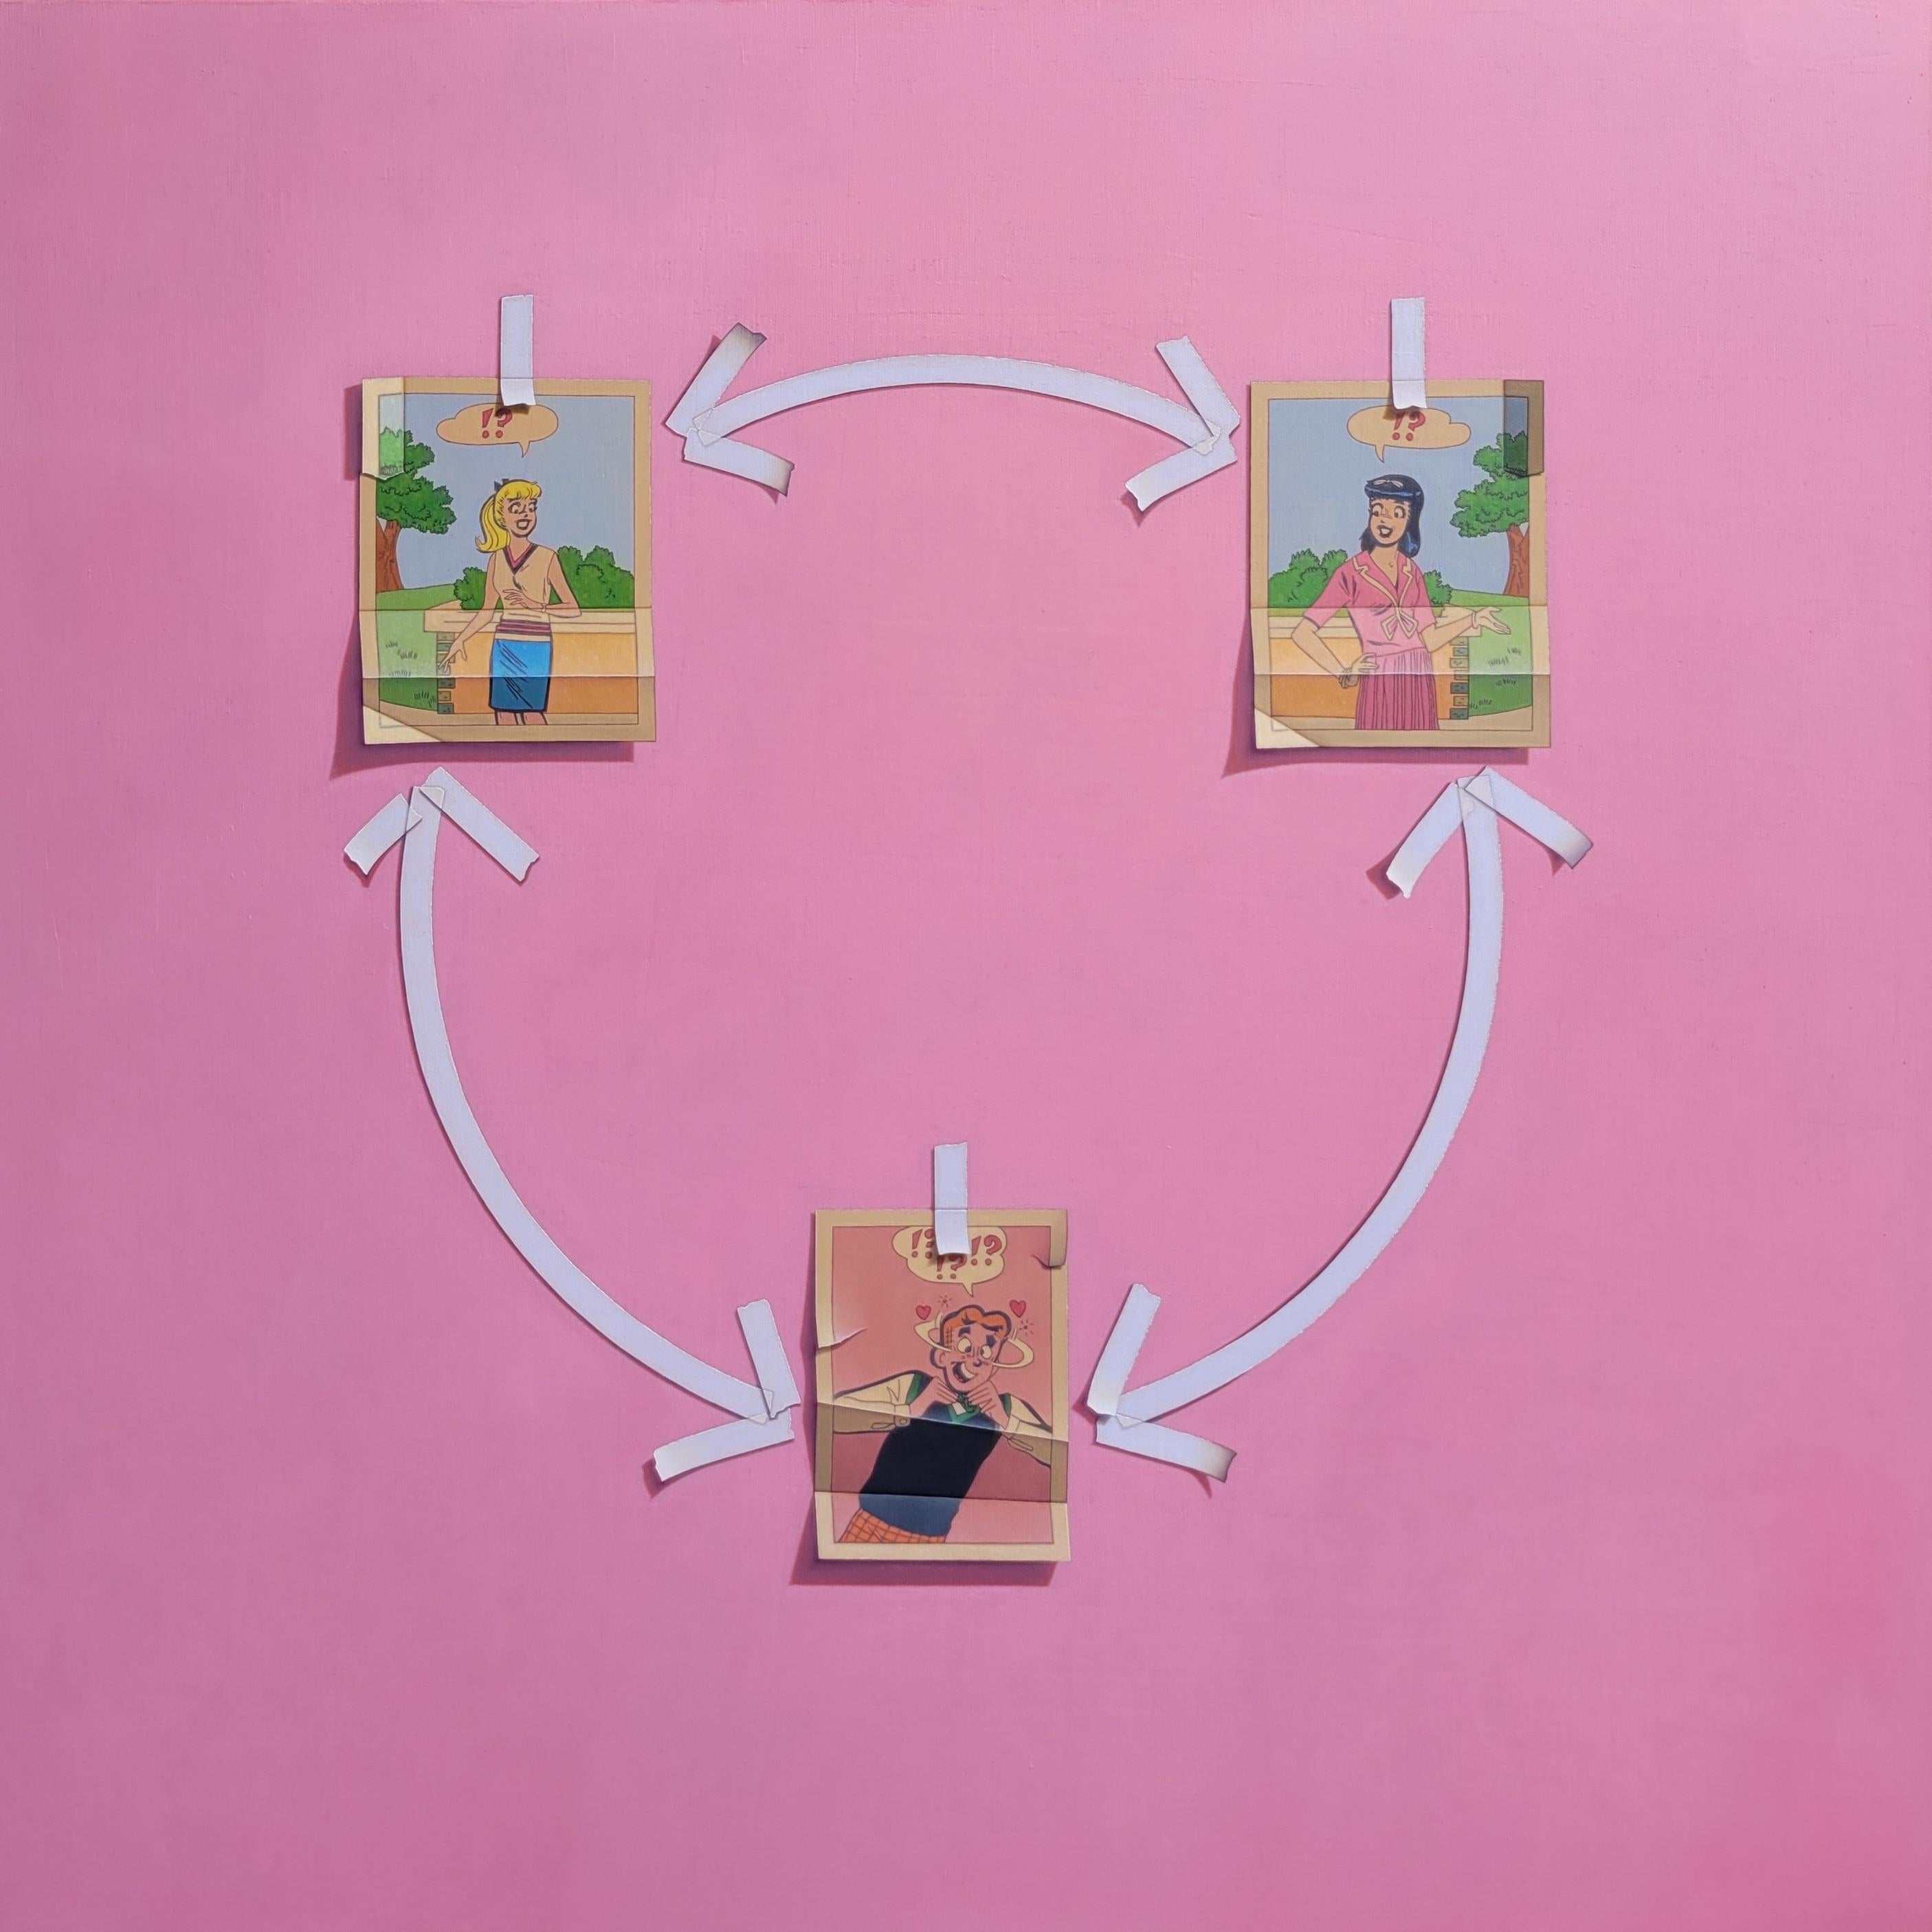 Anthony Mastromatteo Still-Life Painting - "The Three Body Problem" pink comic book trompe l'oeil of physics phenomenon